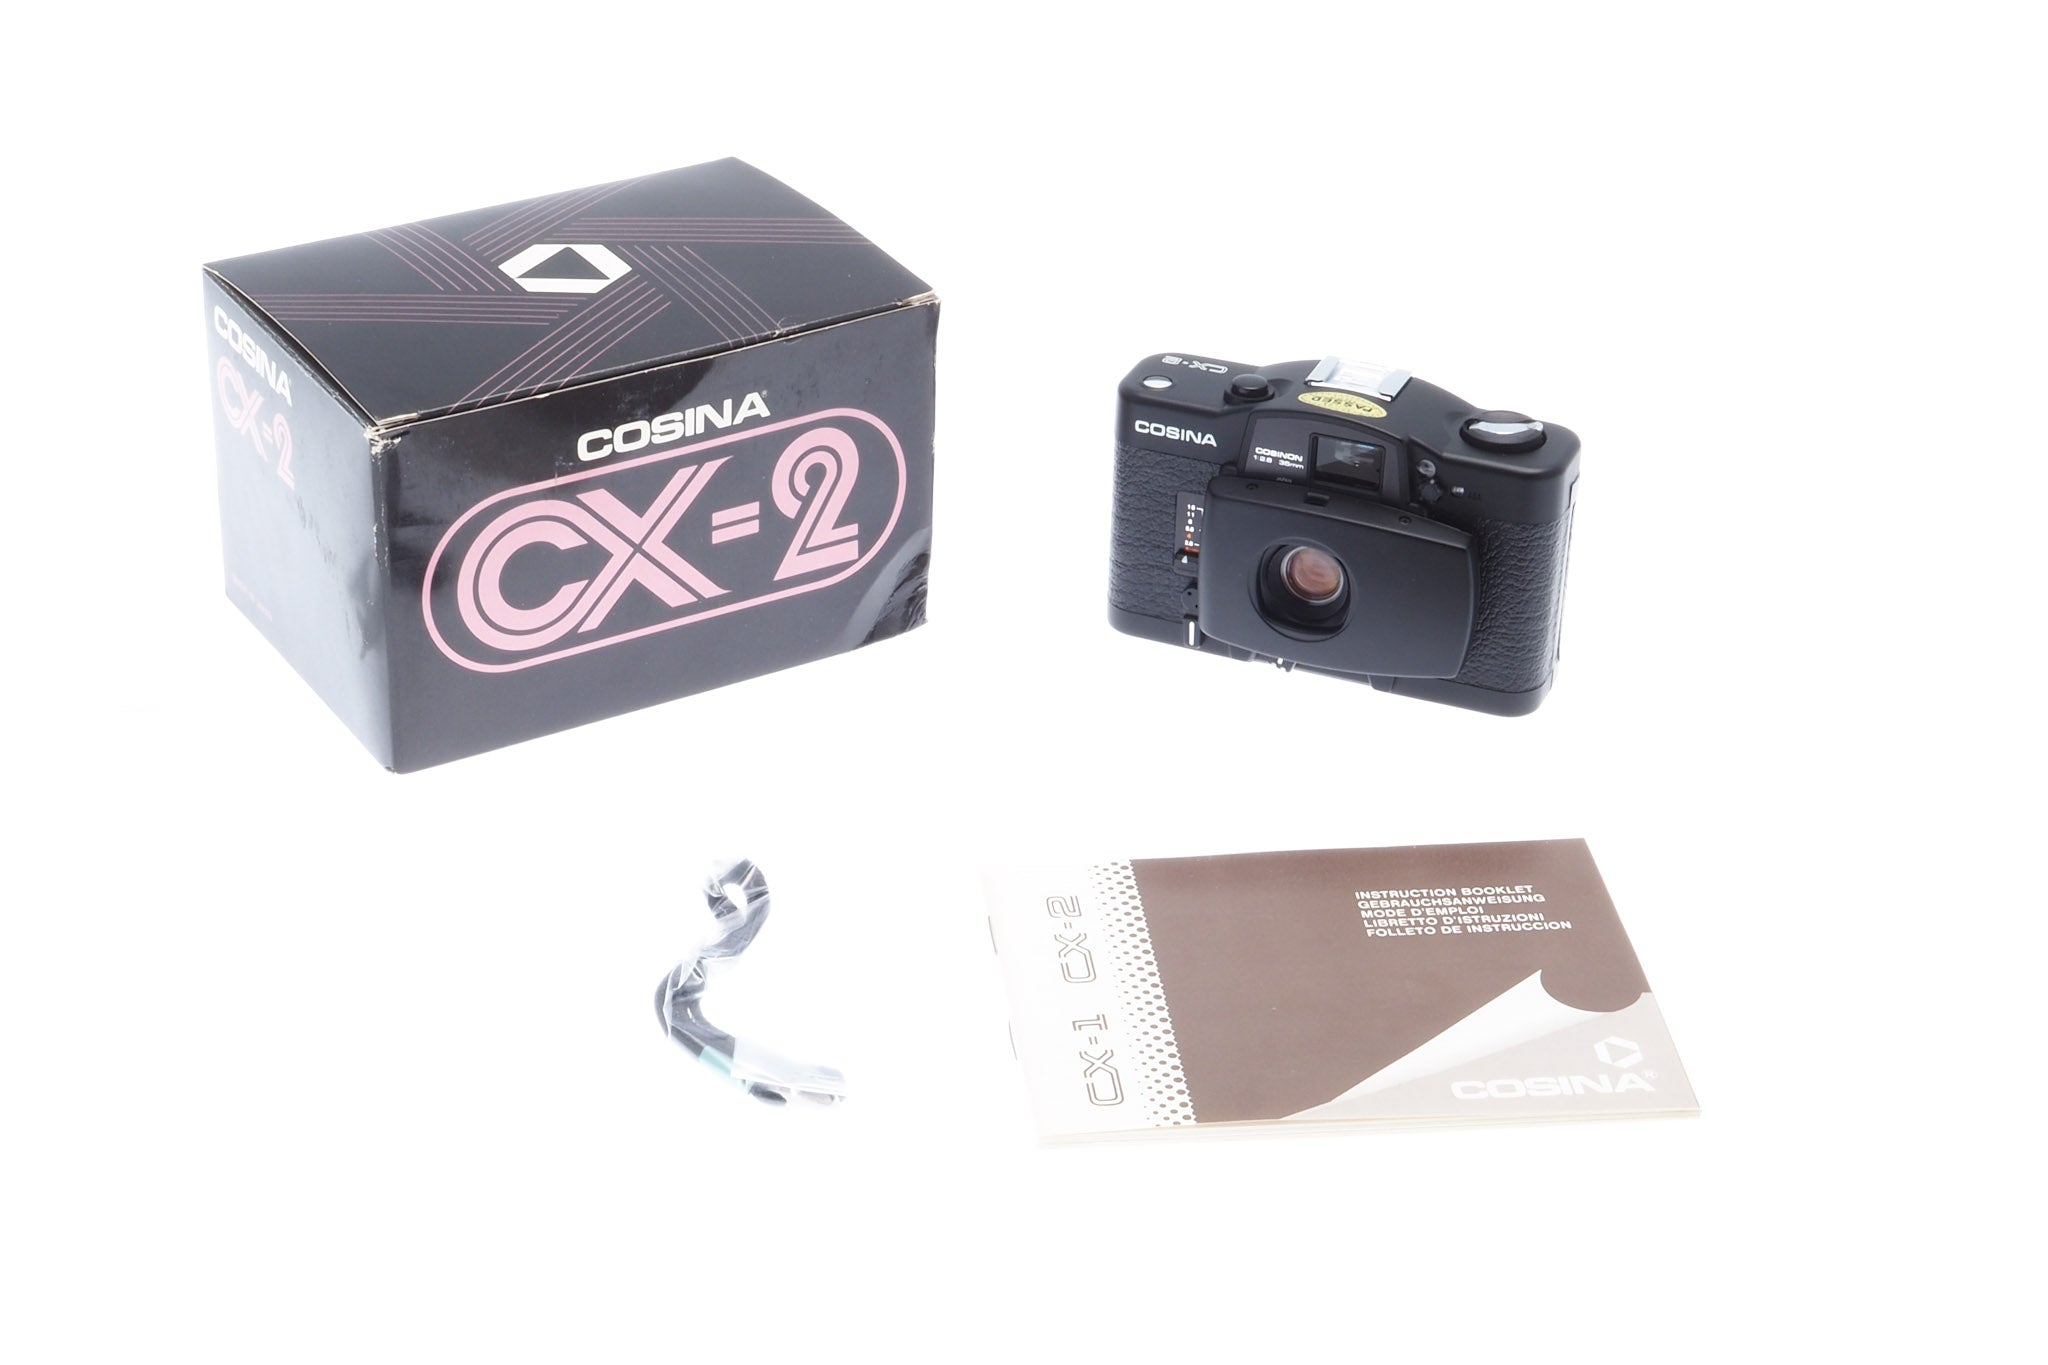 Cosina CX-2 - 35mm Film Camera - with 6 month warranty